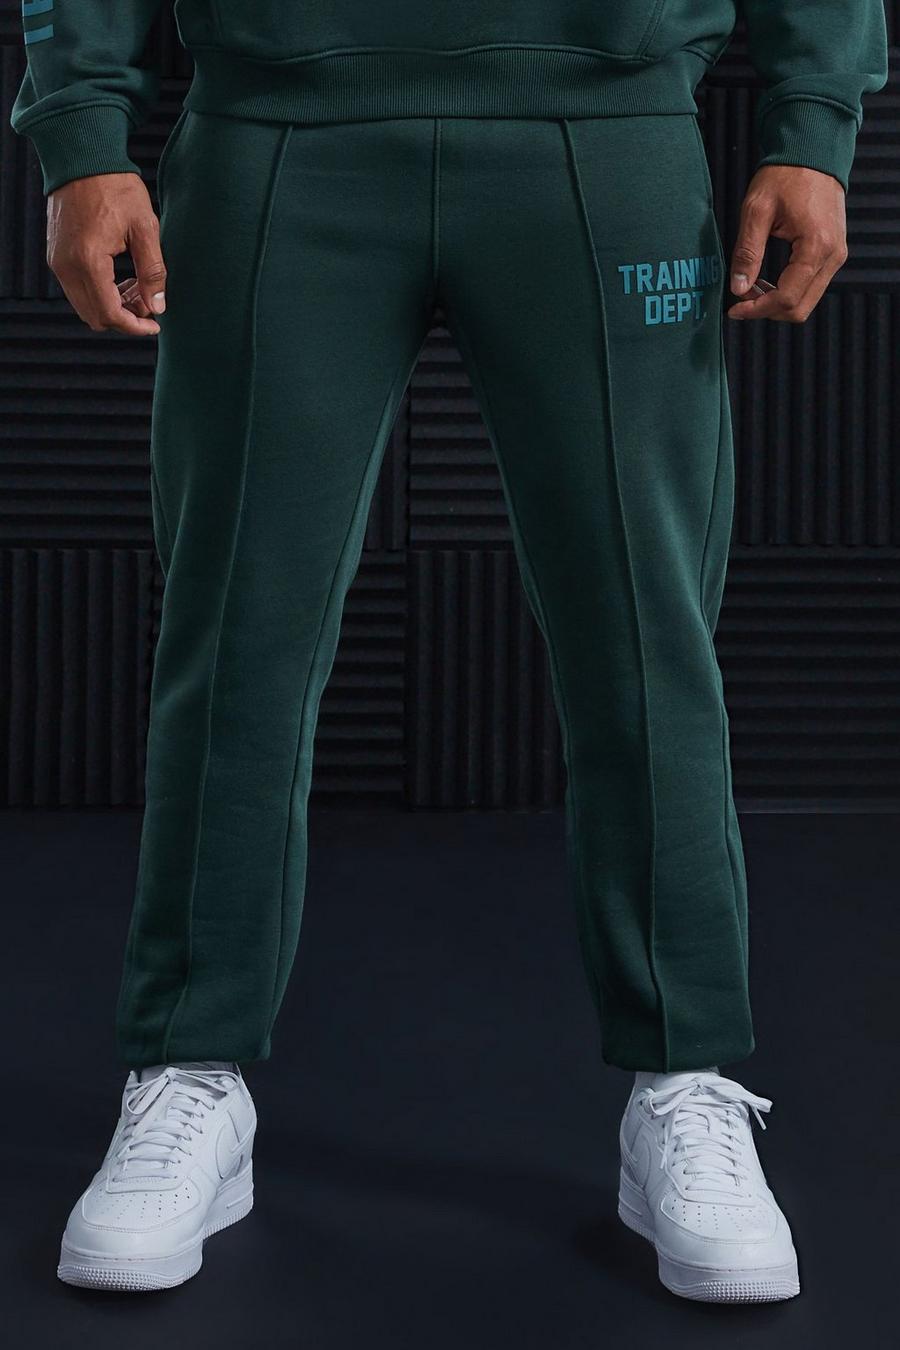 Pantaloni tuta Active Training Dept Slim Fit, Dark green